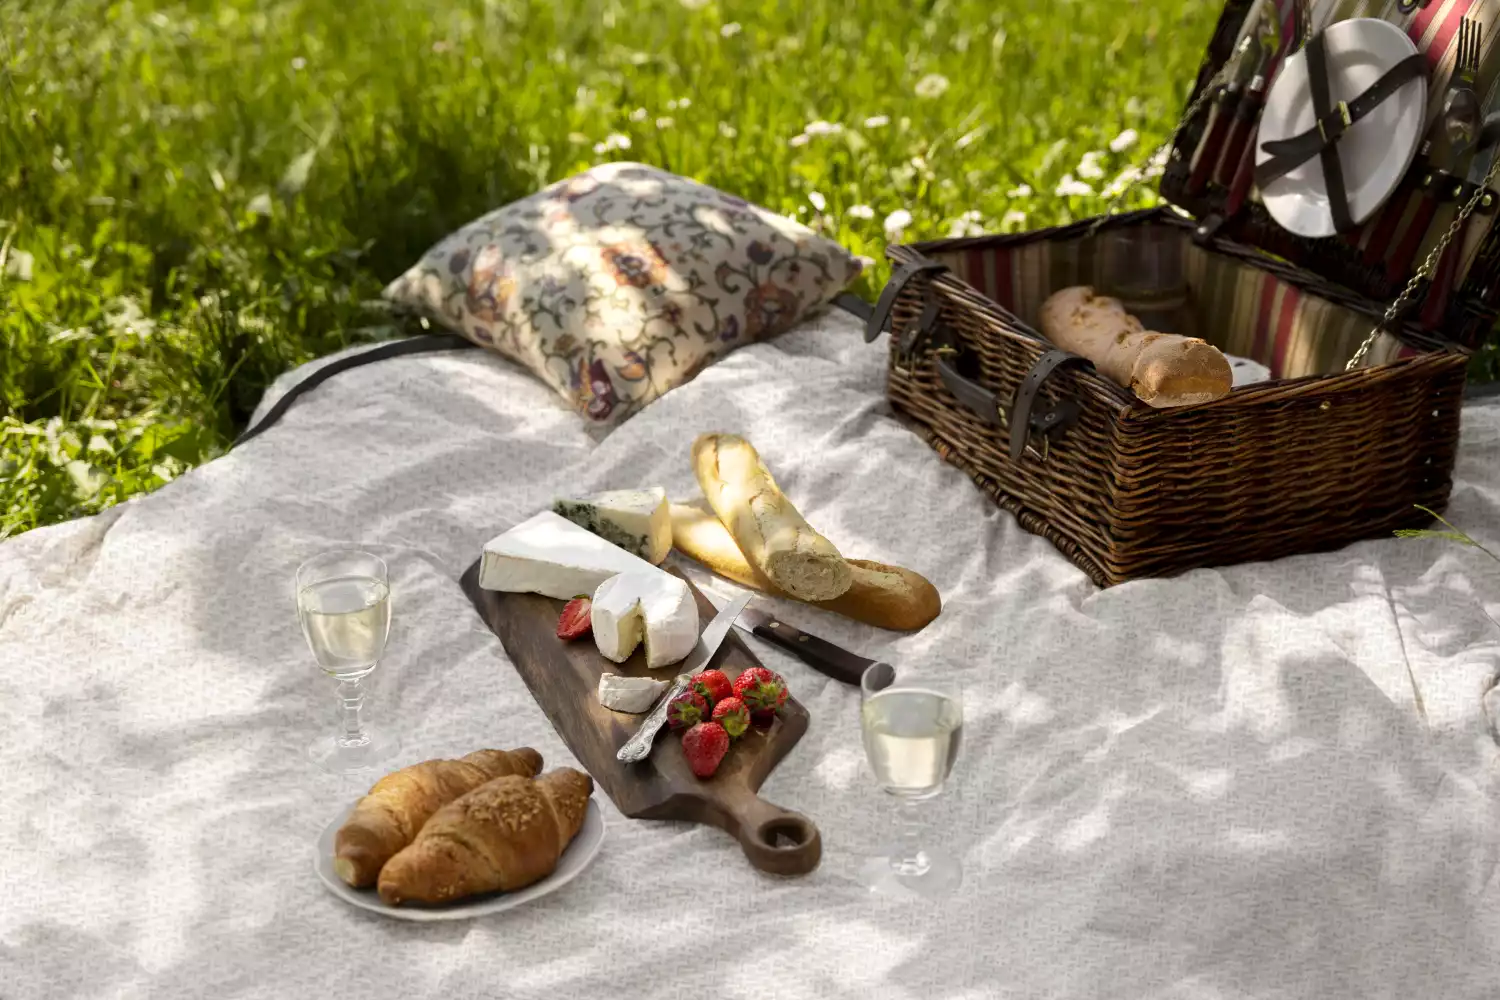 perfect picnic blanket